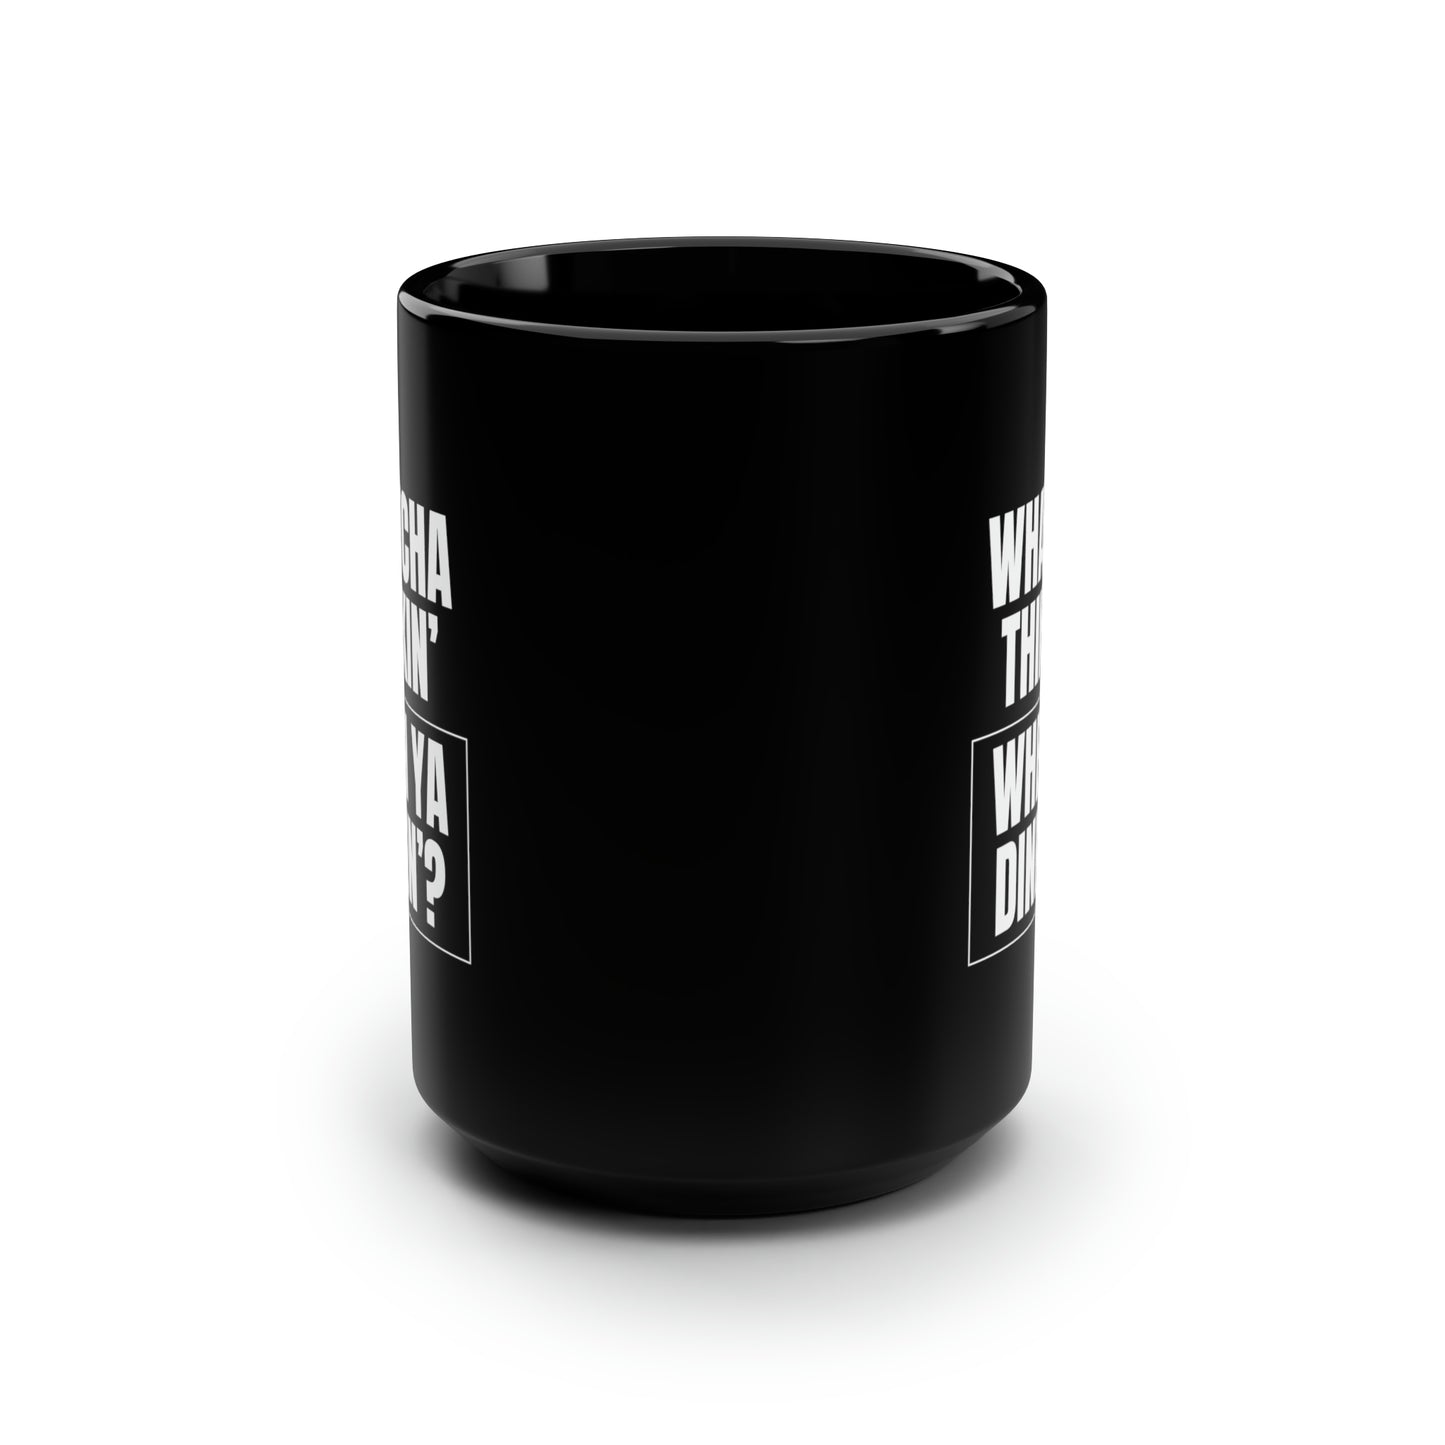 Whatcha Thinkin' When Ya Dinkin'? 15 Oz Black Coffee Mug